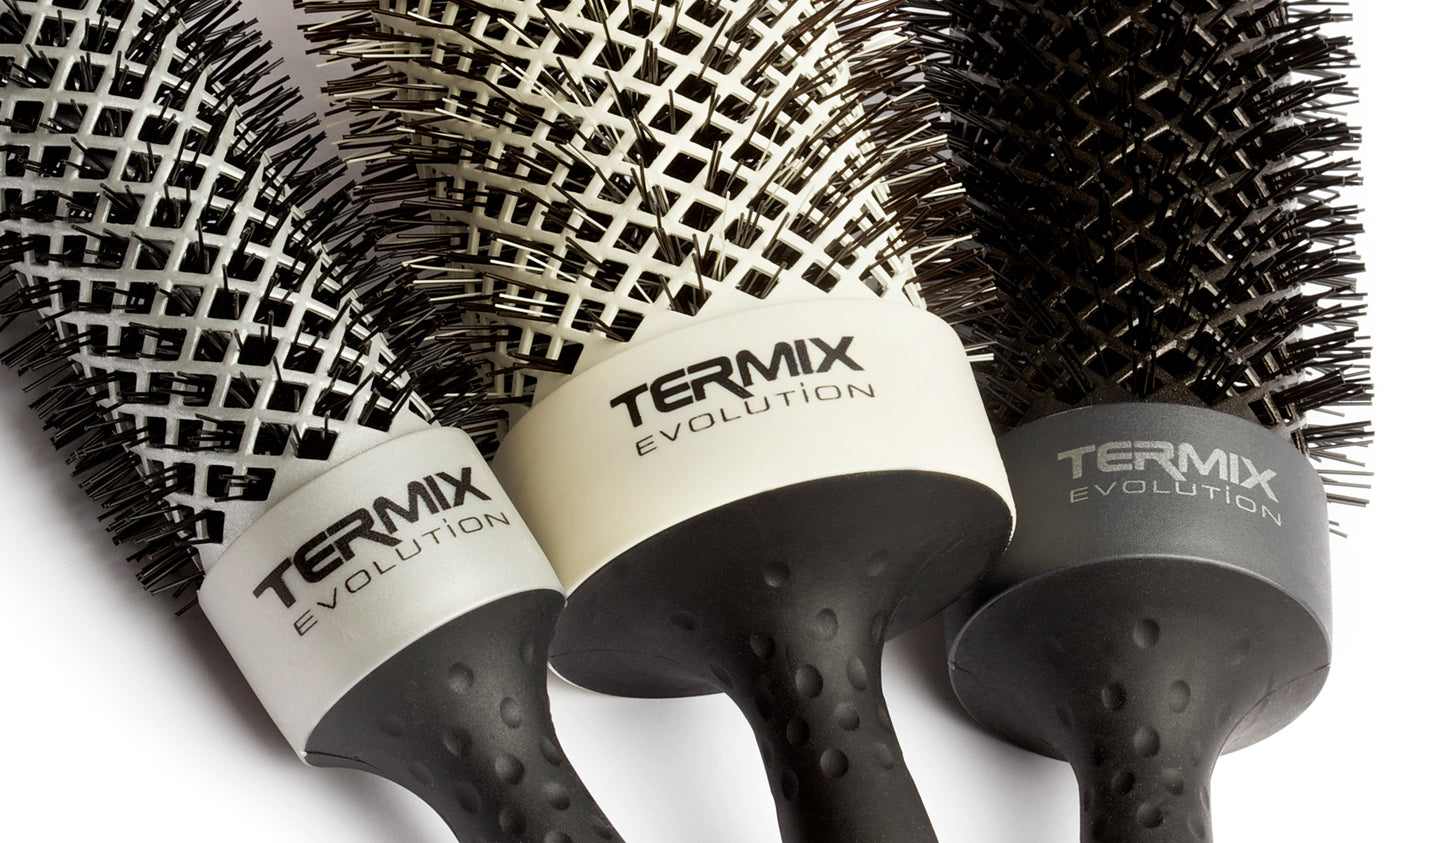 Termix Evolution Styling Brush 12mm